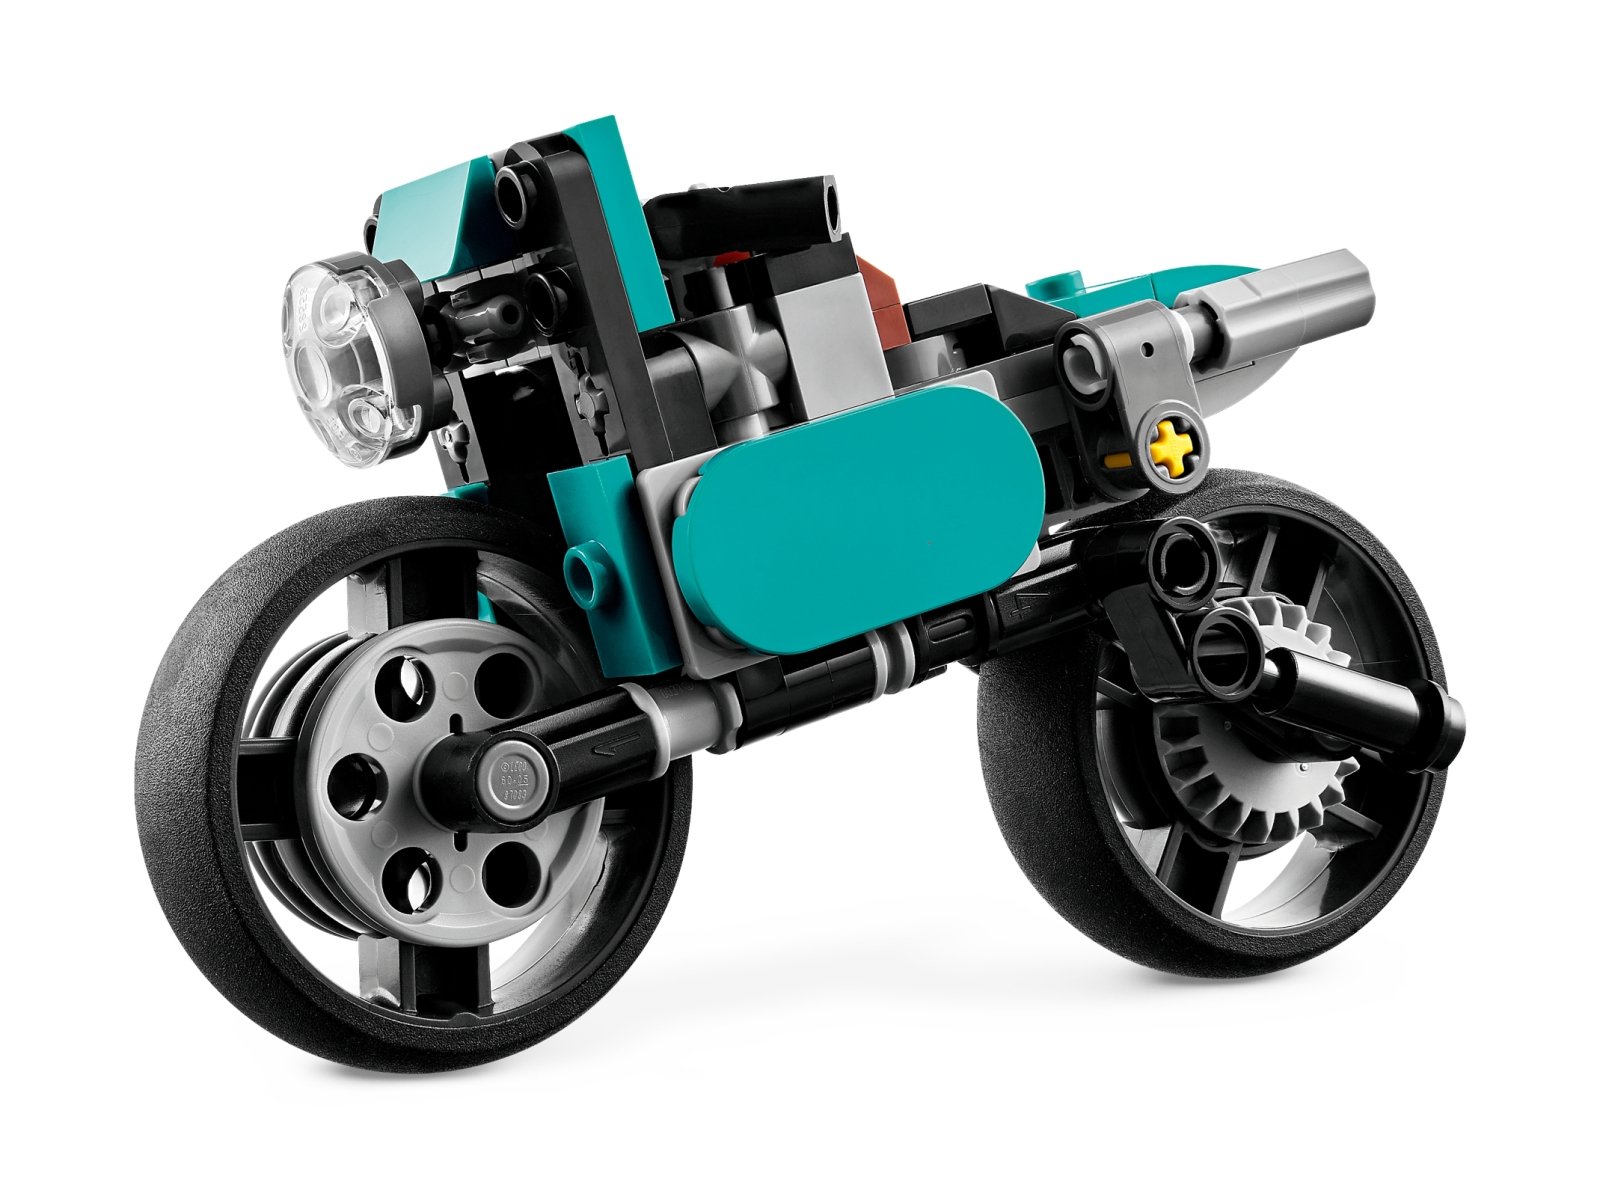 LEGO Creator 3 w 1 31135 Motocykl vintage